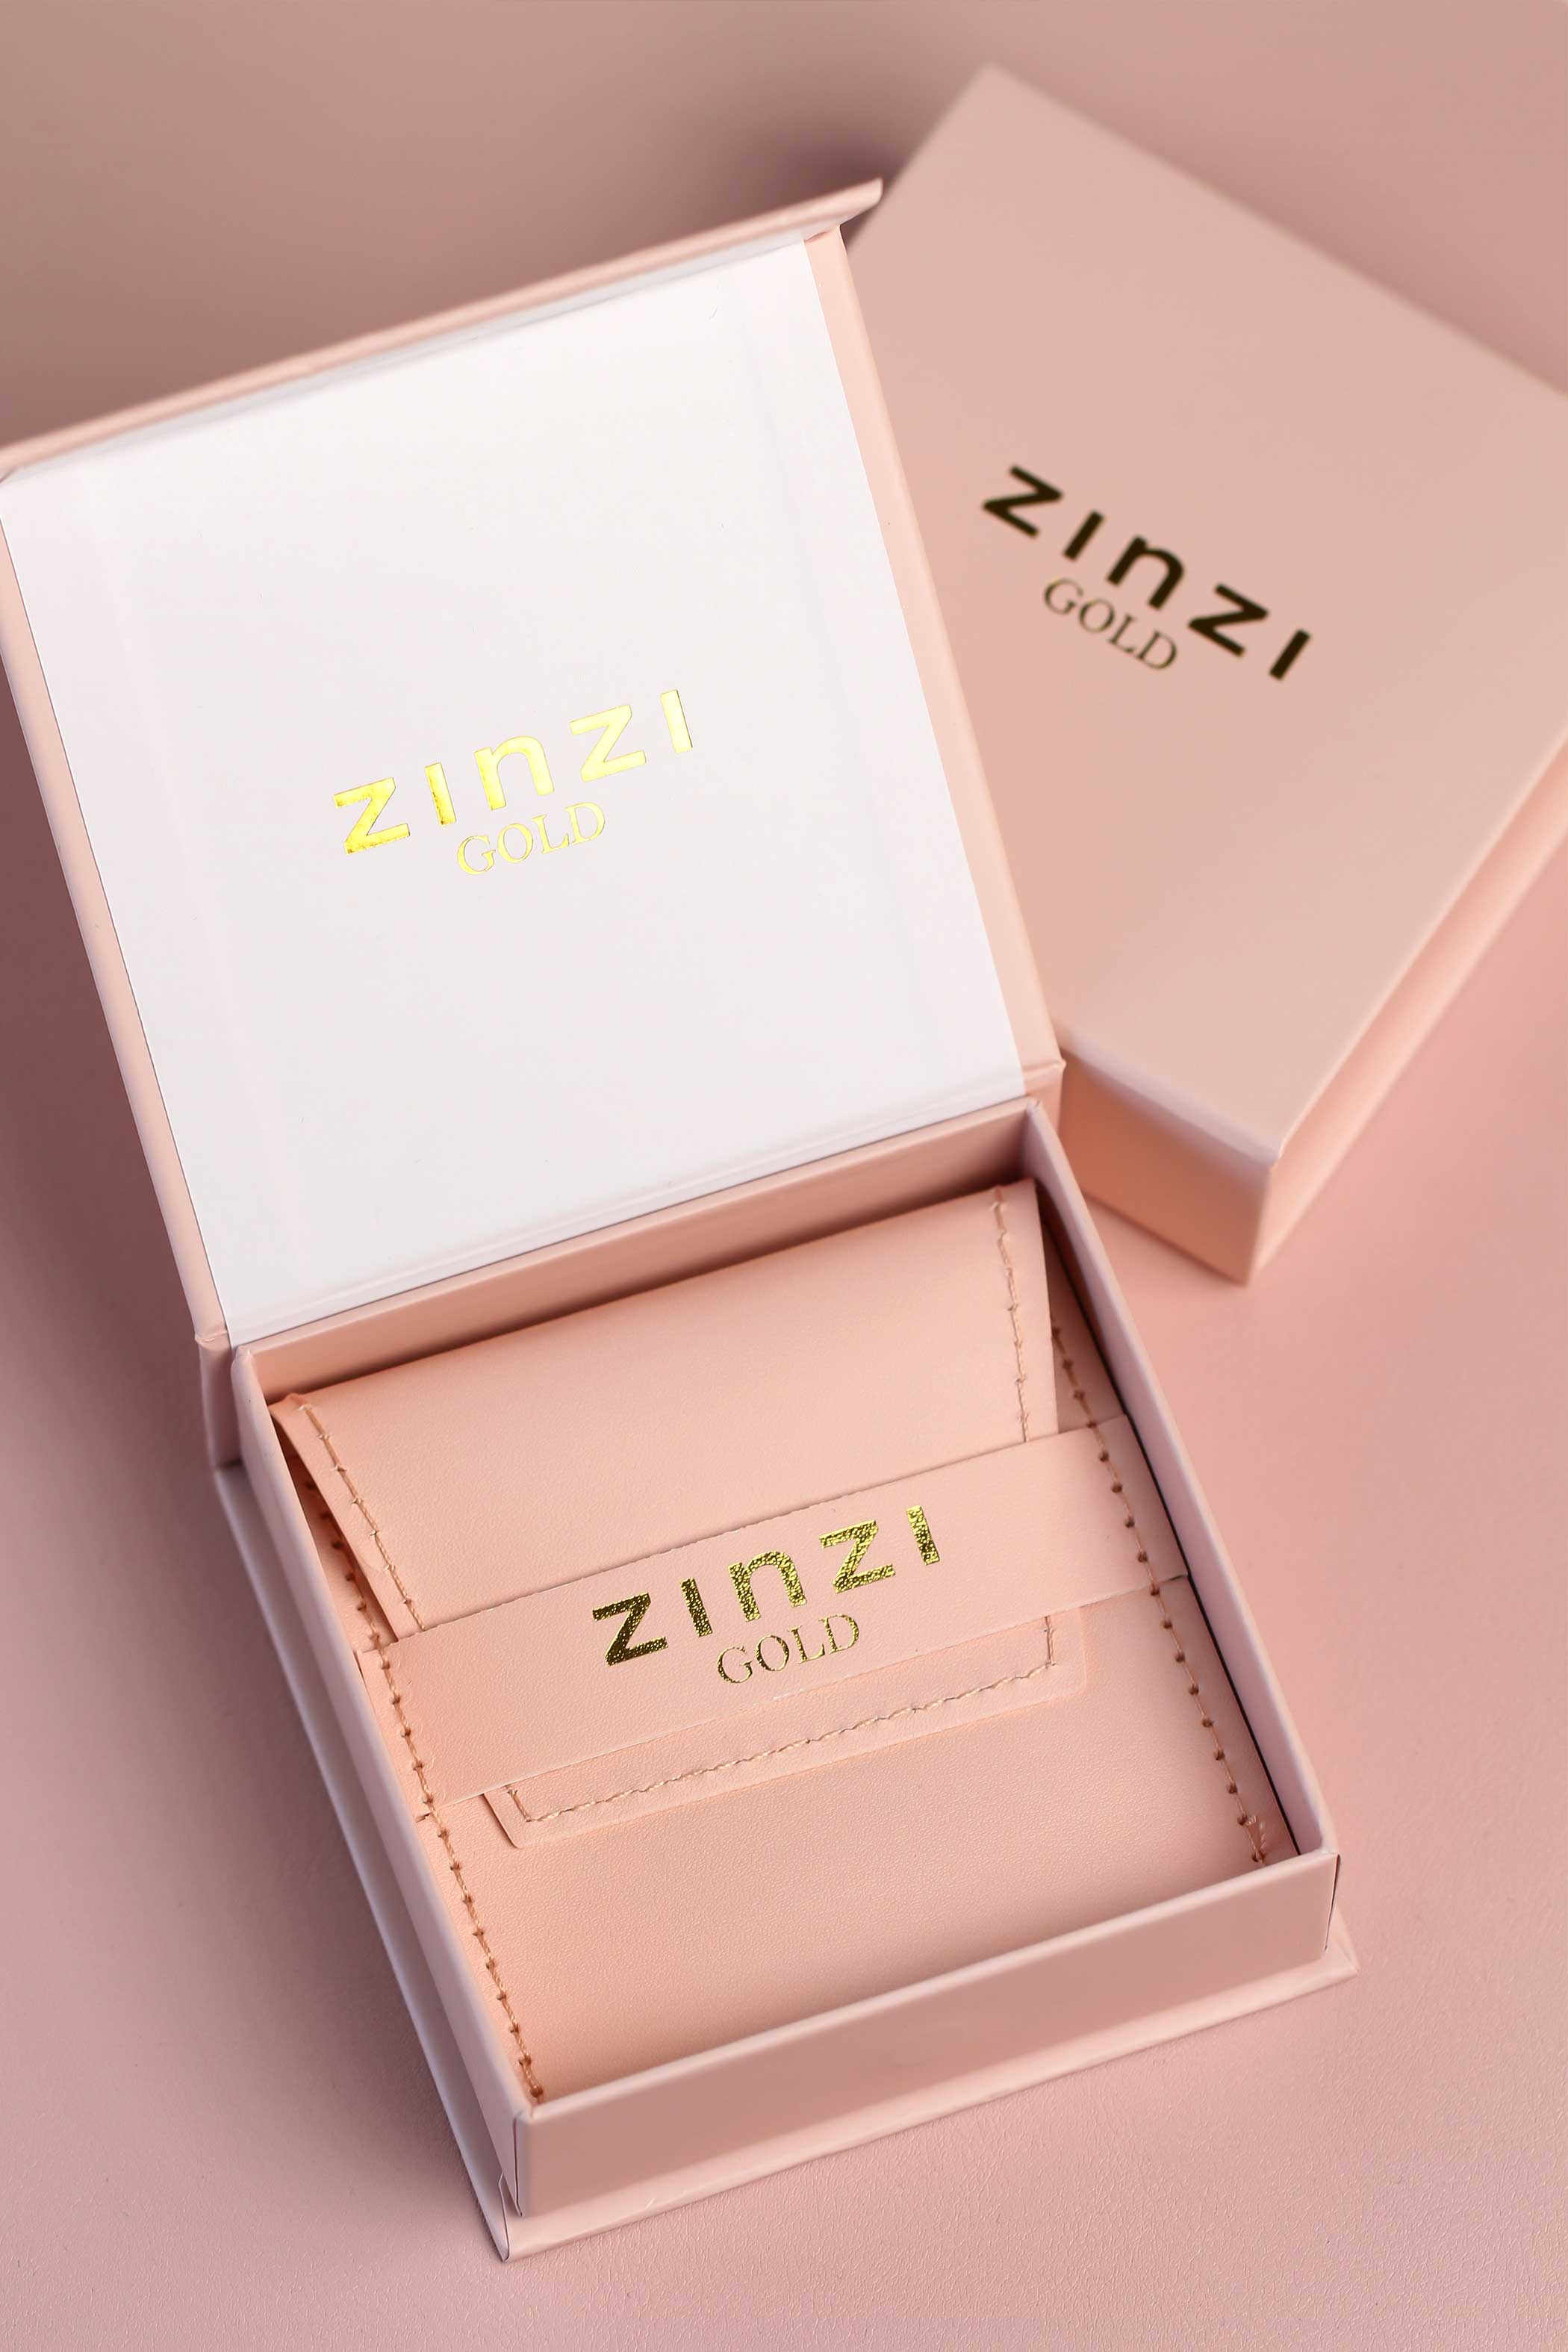 ZINZI 14K Gold Earrings Pendants Beads 6mm ZGCH392 (excl. hoop earrings)